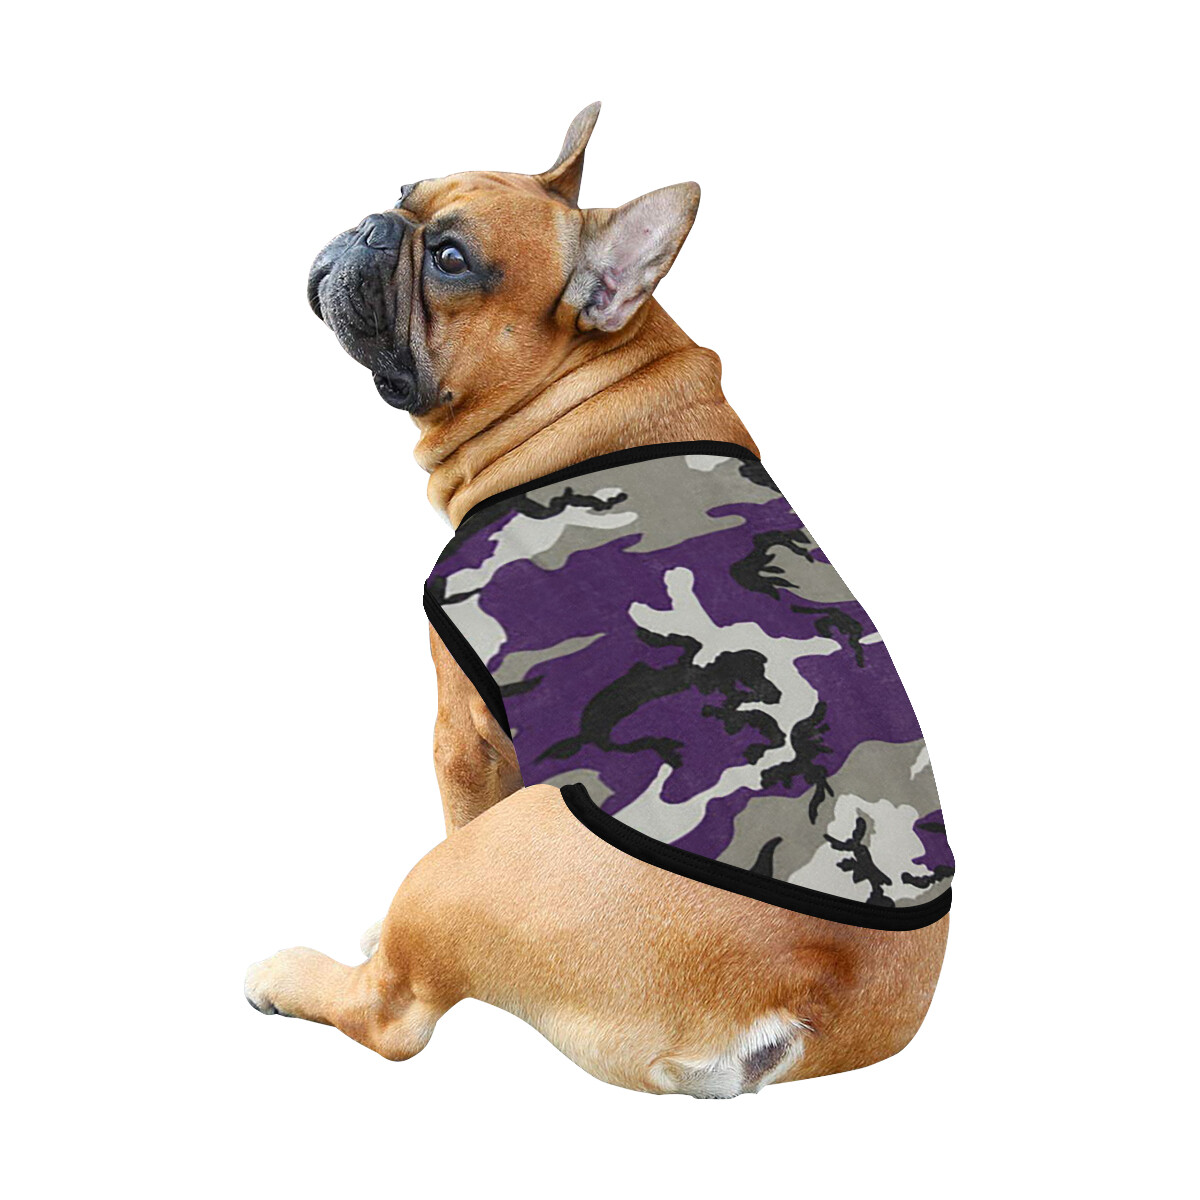 🐕 Camo Army Dog shirt Dog Tank Top, Dog shirt, Dog clothes, Gifts, front back print, 7 sizes XS to 3XL, dog t-shirt, dog gift black purple white gray